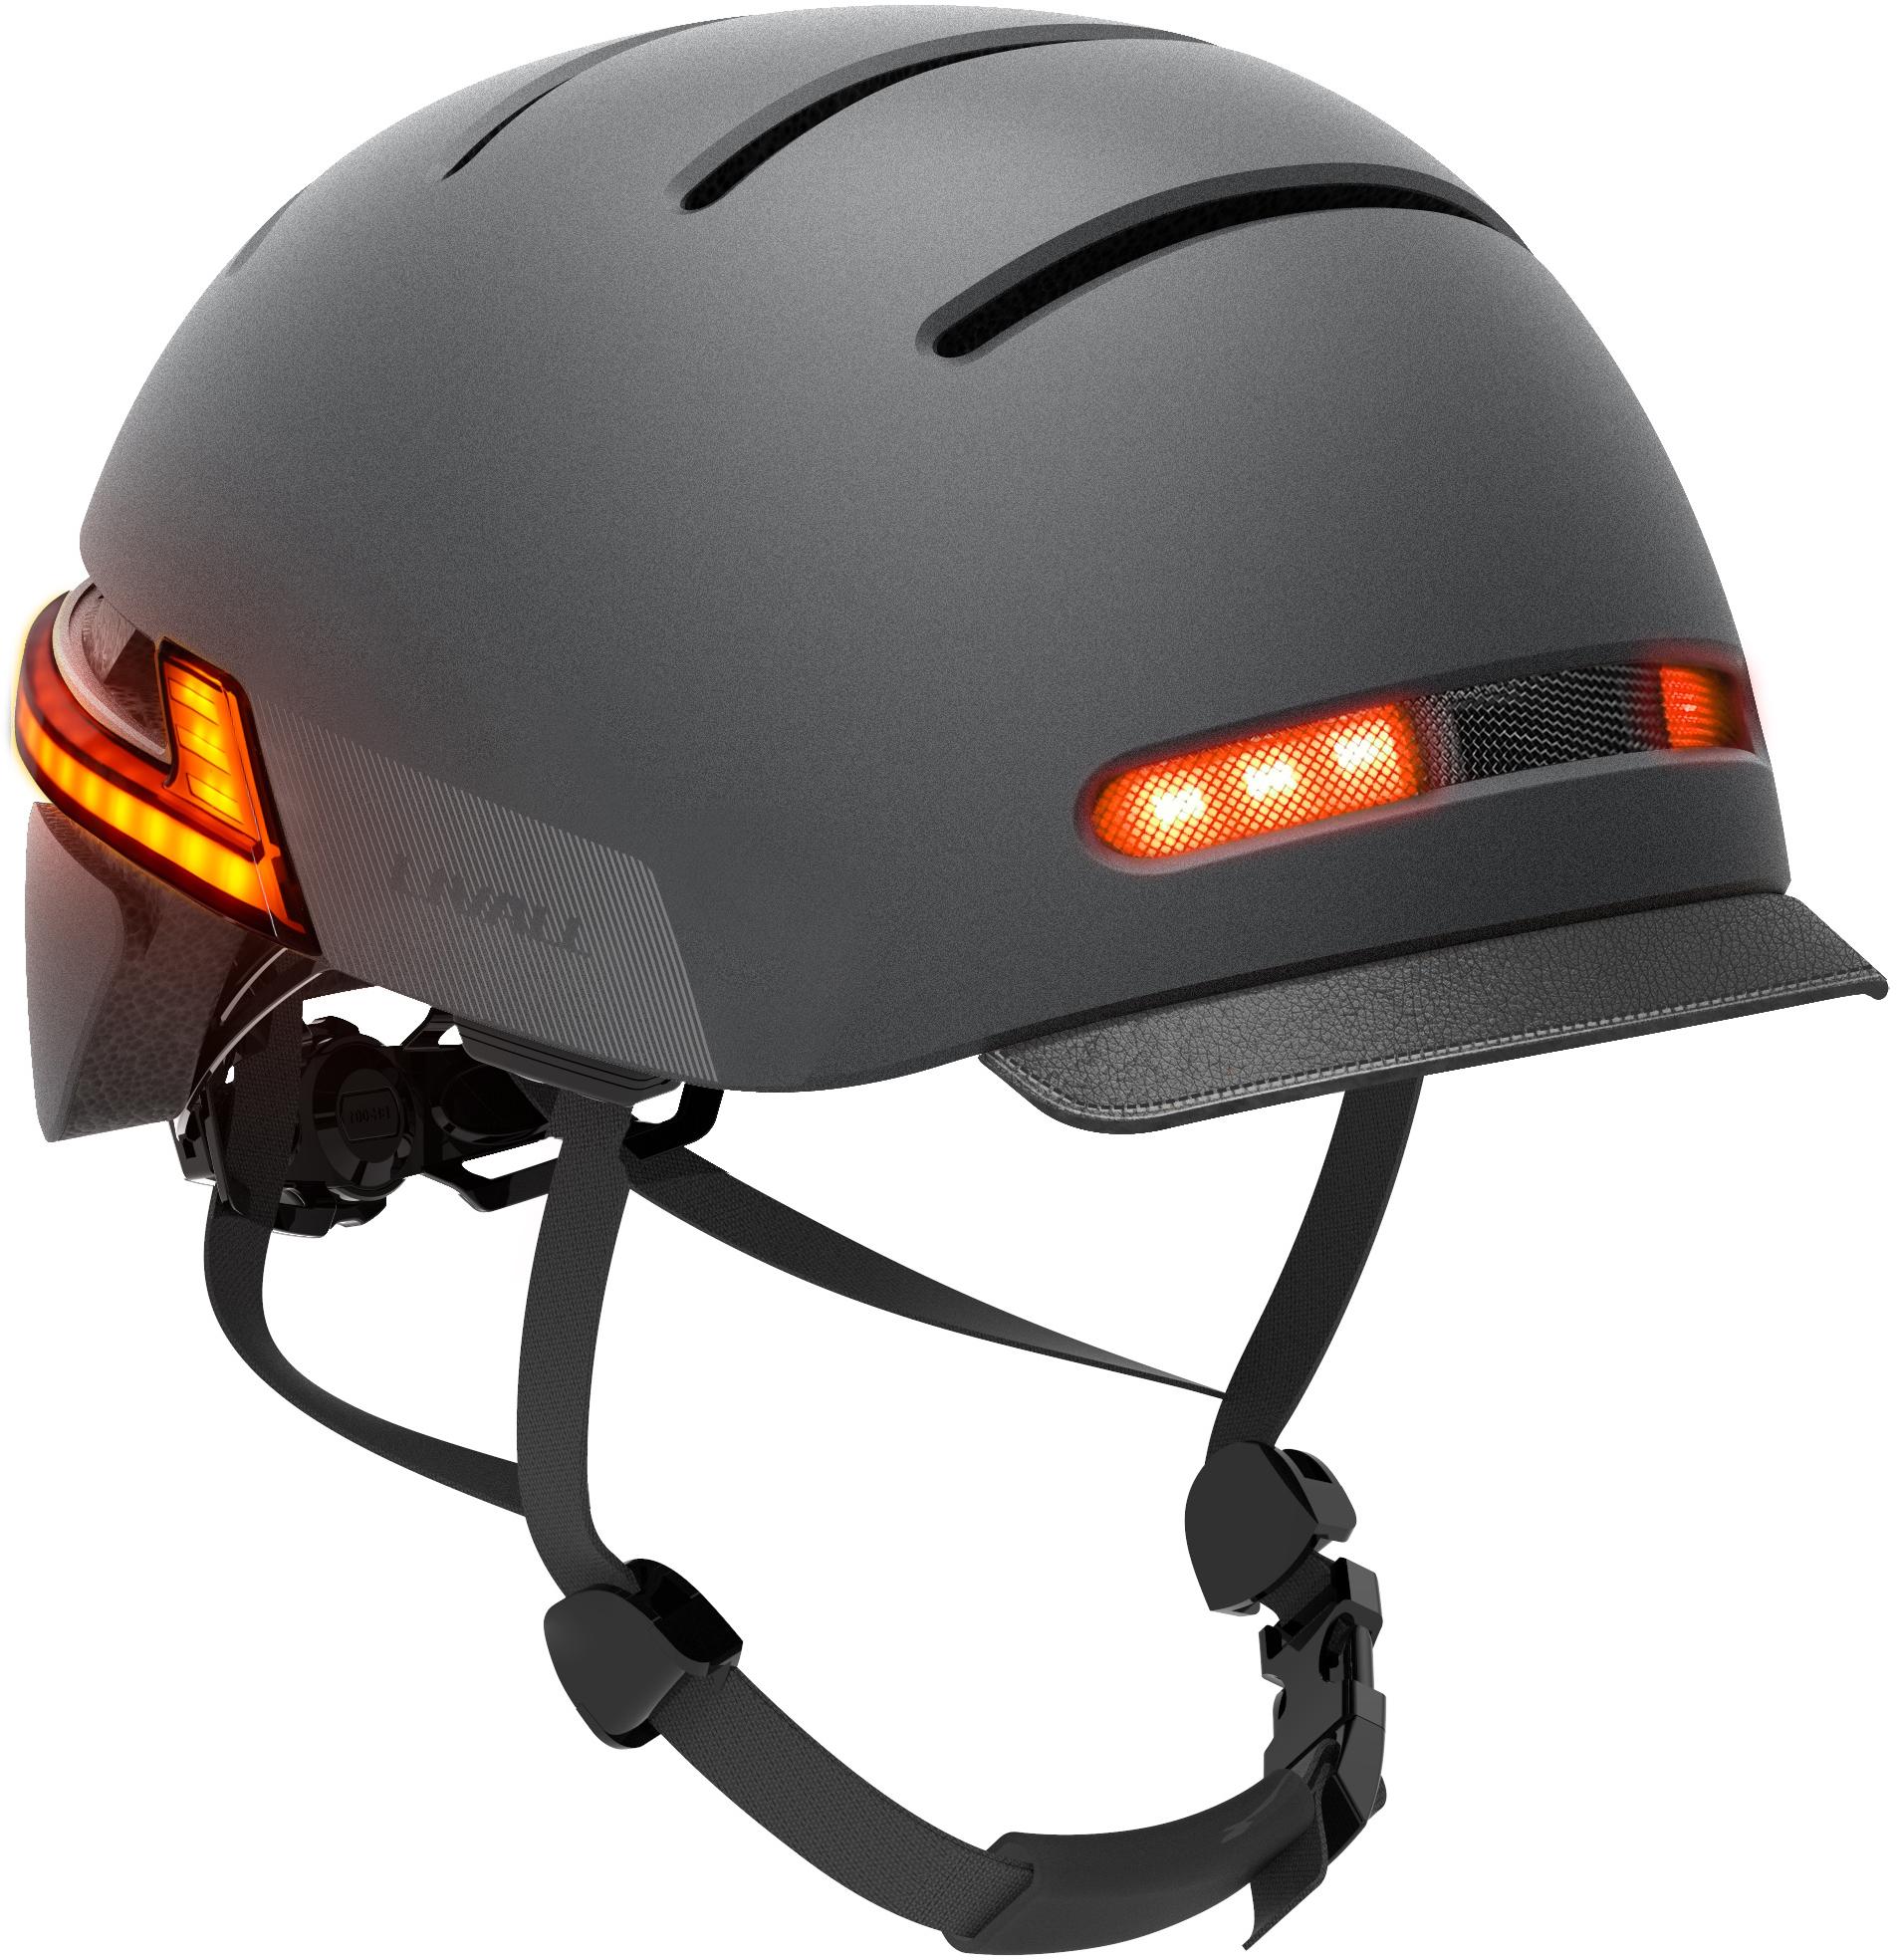 Livall Bh51M Neo Helmet - Black, 57-61Cm